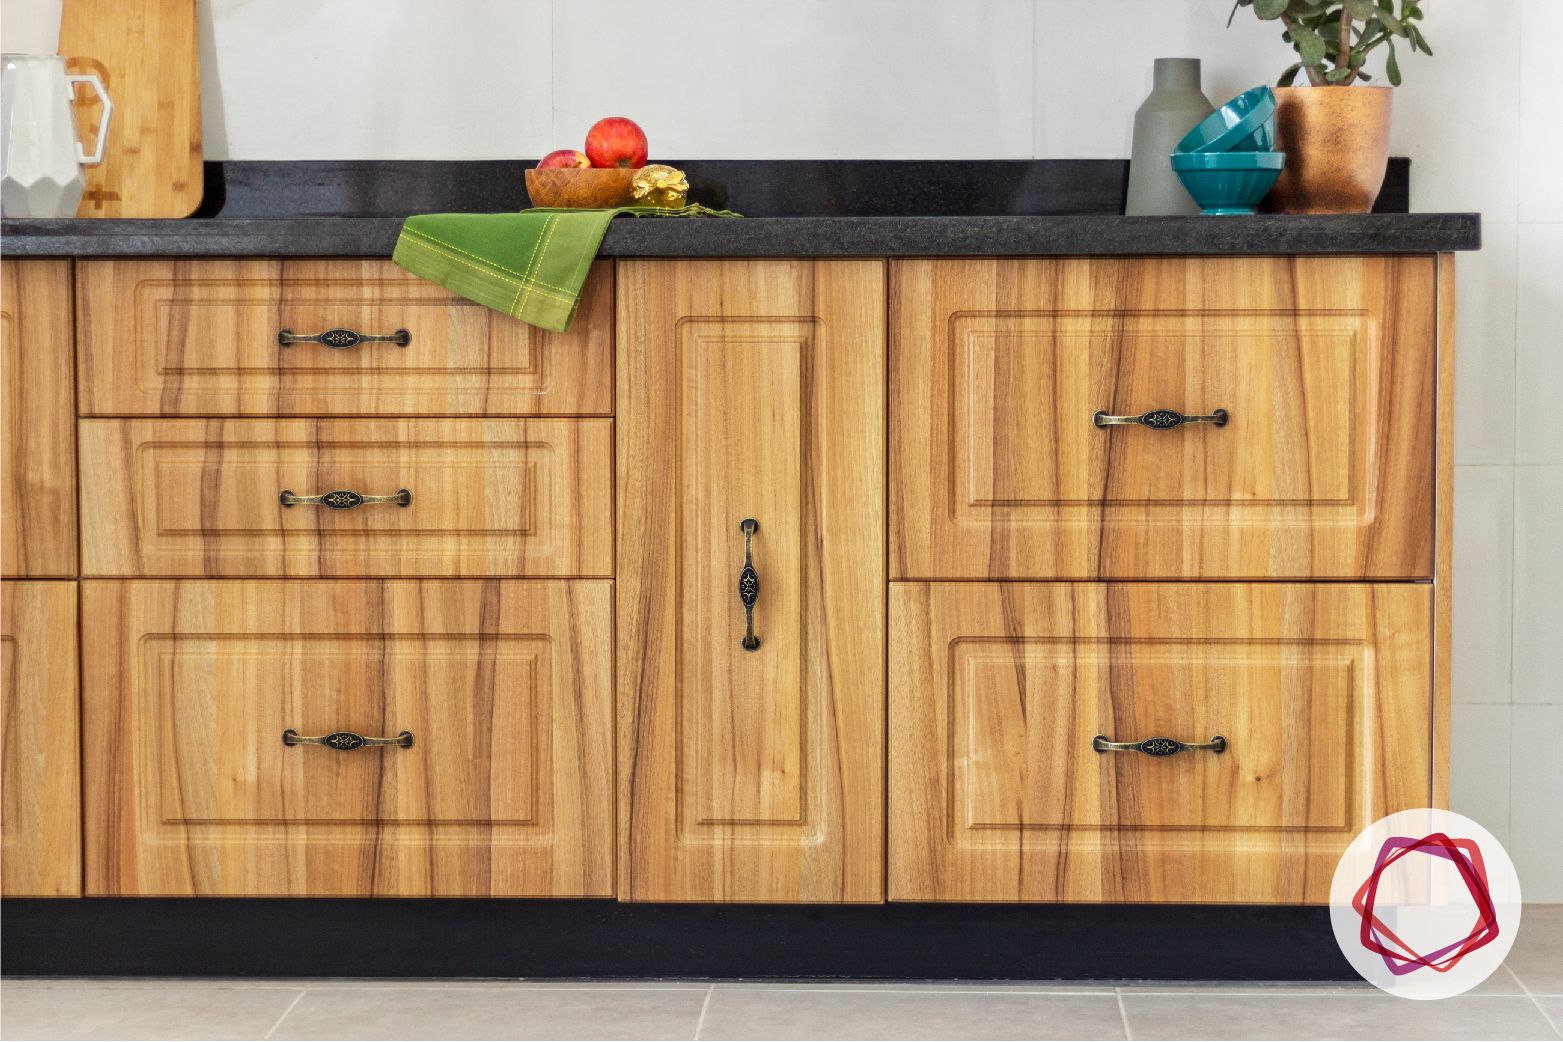  unit-wooden cabinets-vintage handles